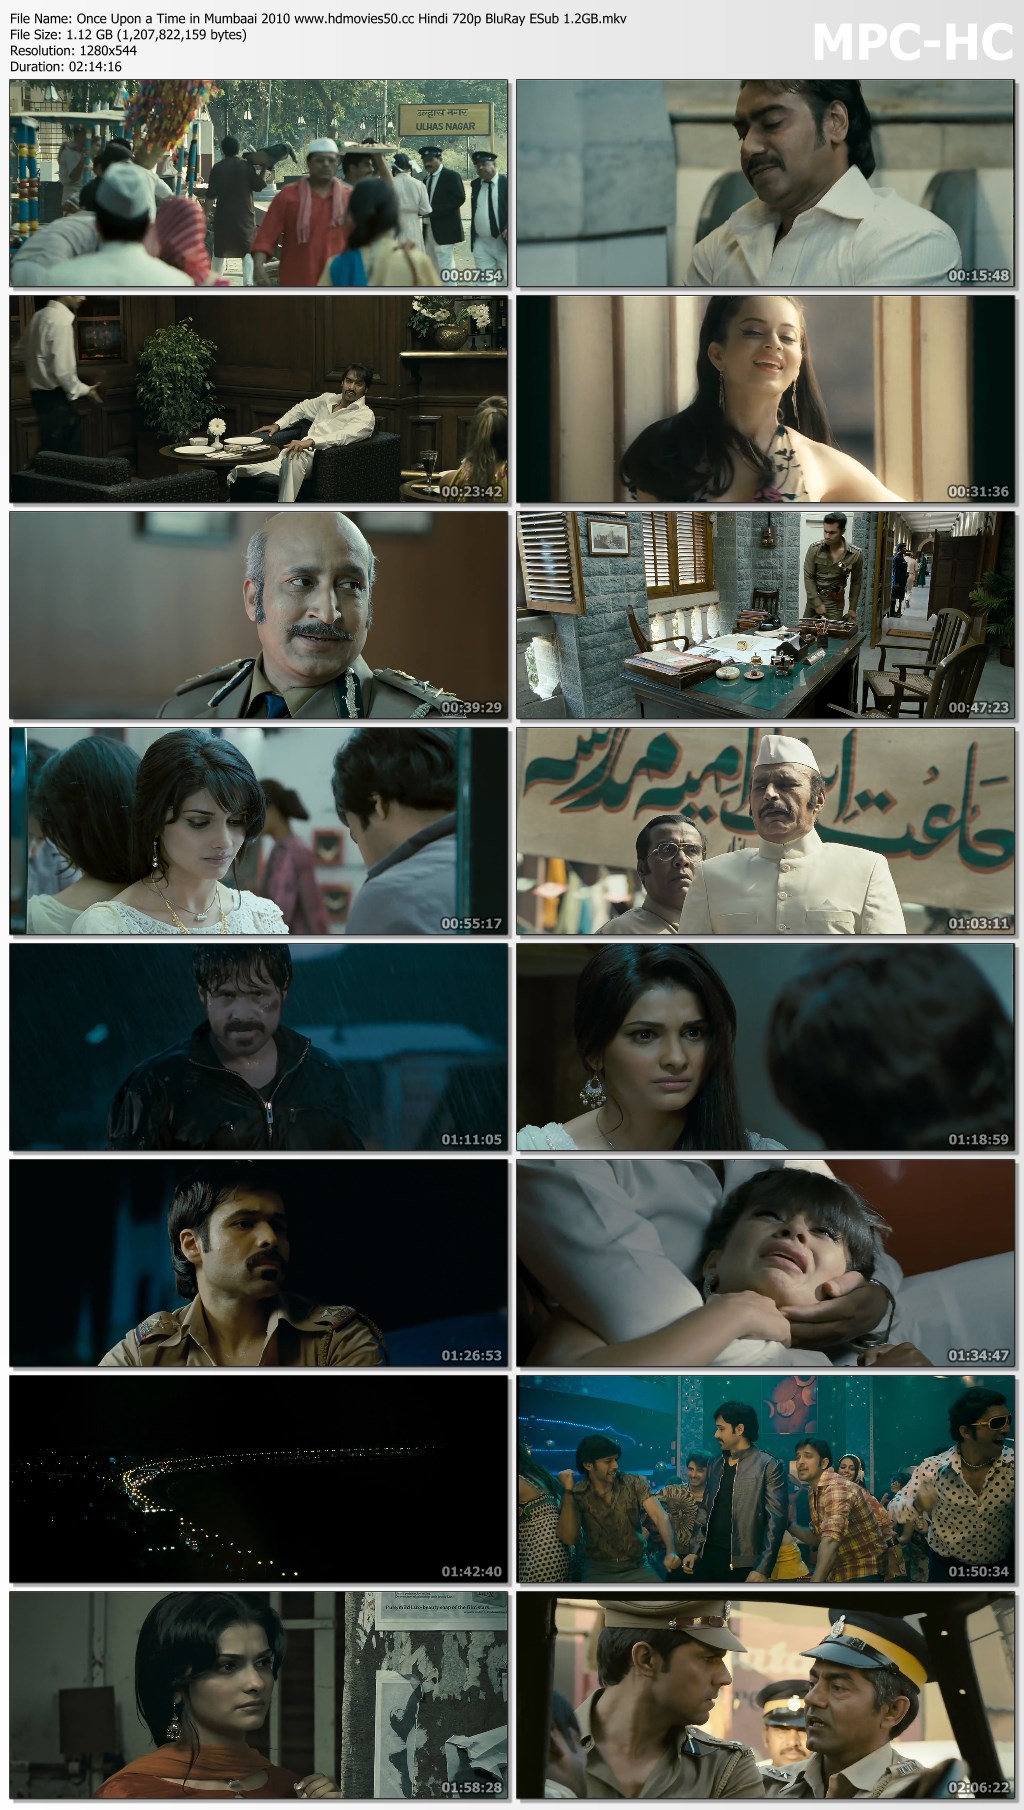 Once Upon a Time in Mumbaai 2010 www.hdmovies50.cc Hindi 720p BluRay ESub 1.2GB.mkv thumbs